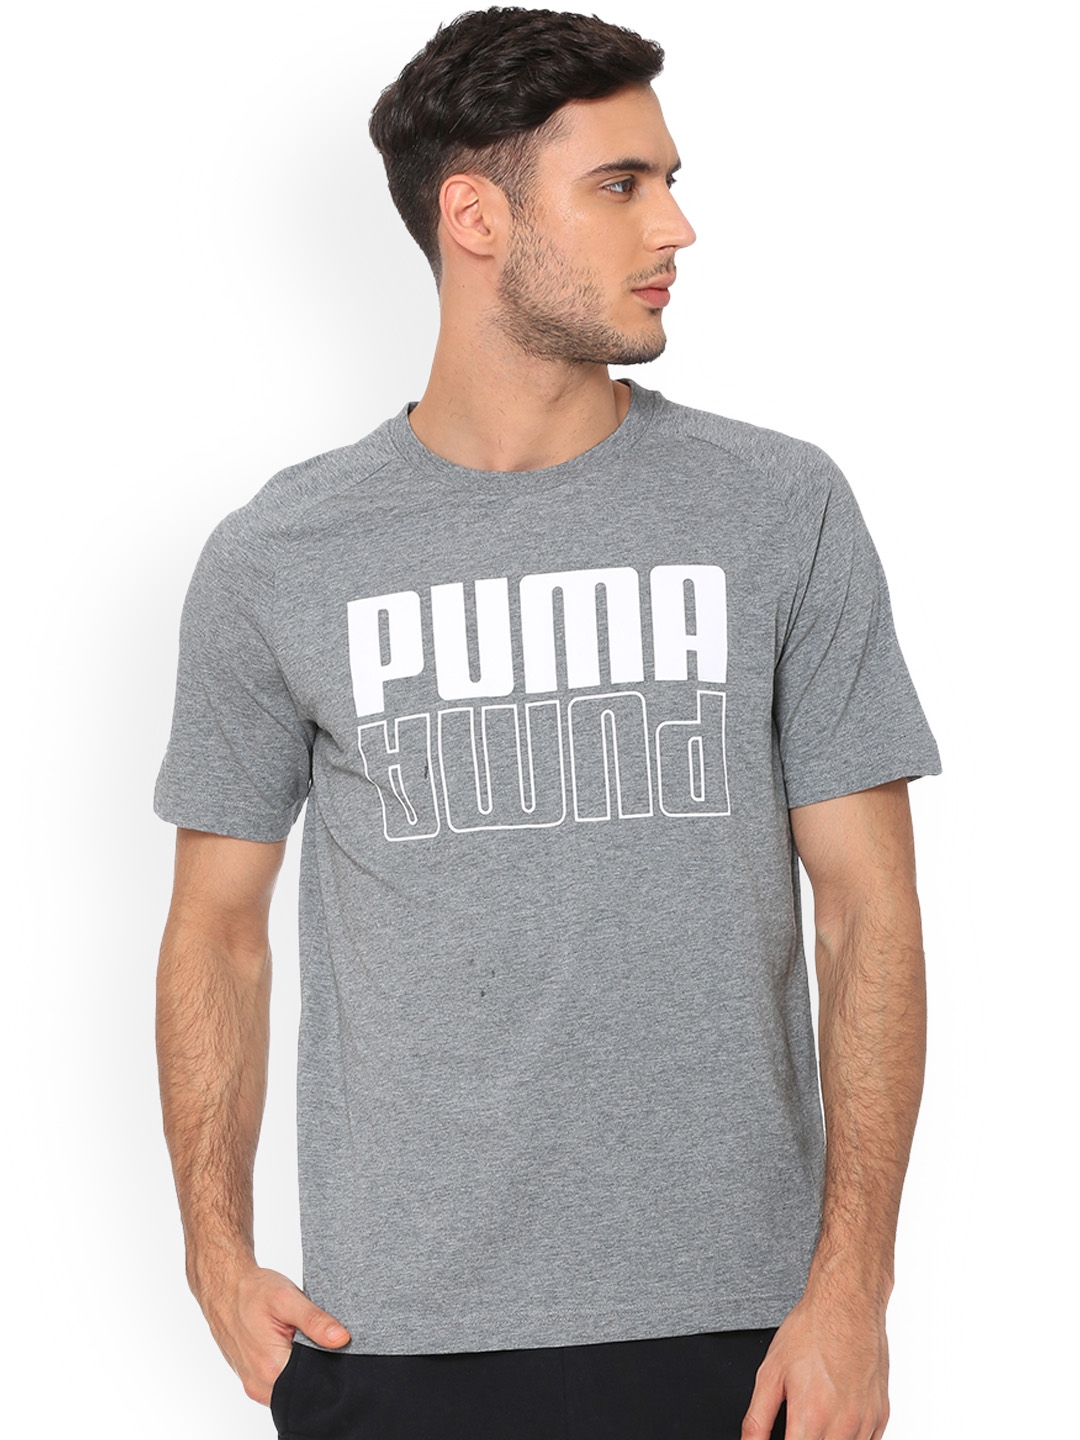 puma t shirt myntra